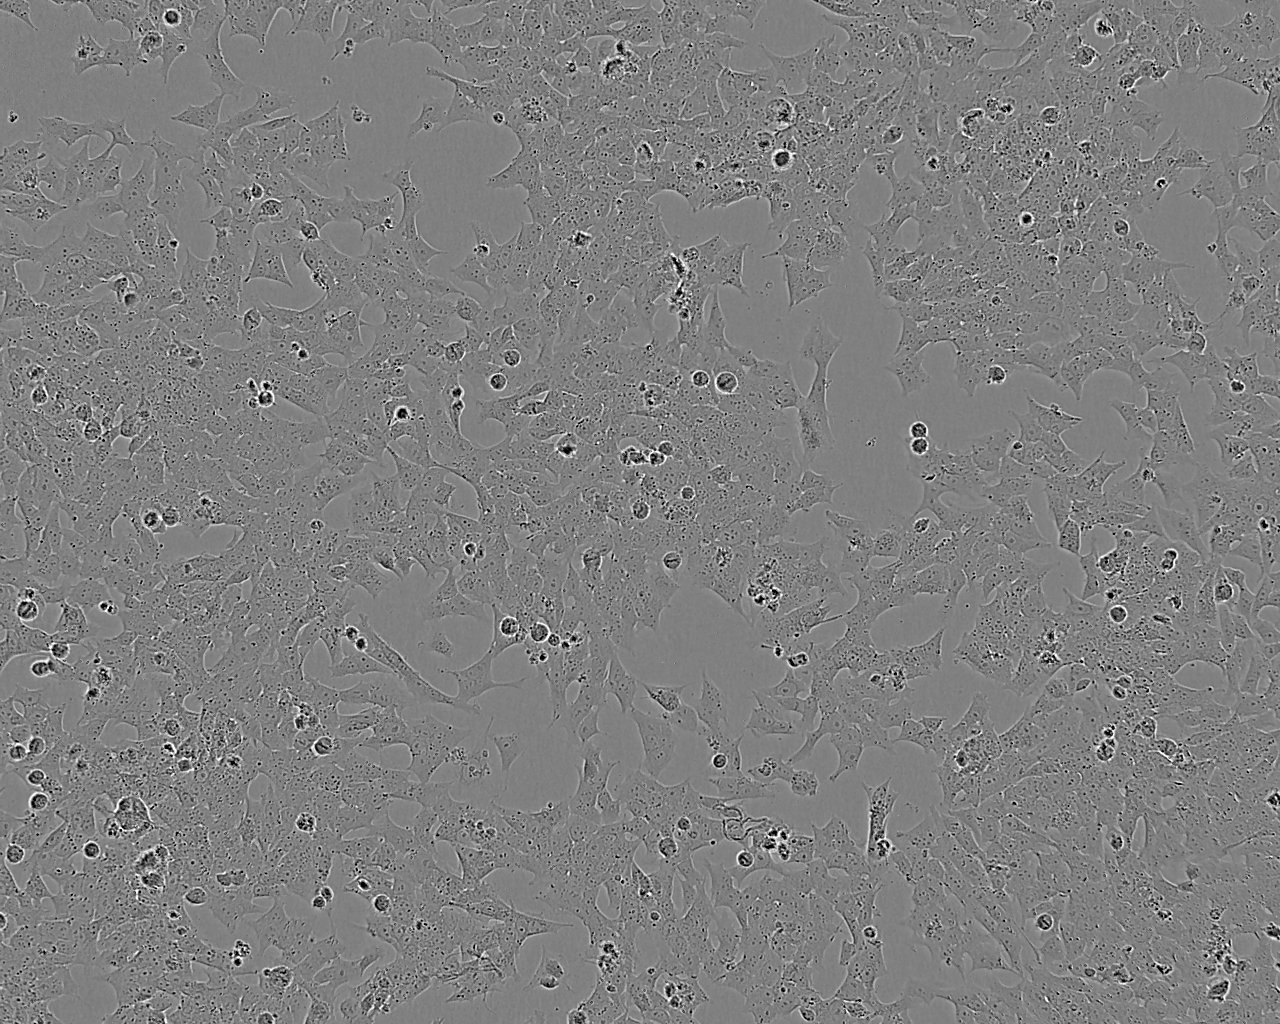 SNU-475 epithelioid cells人肝癌细胞系,SNU-475 epithelioid cells